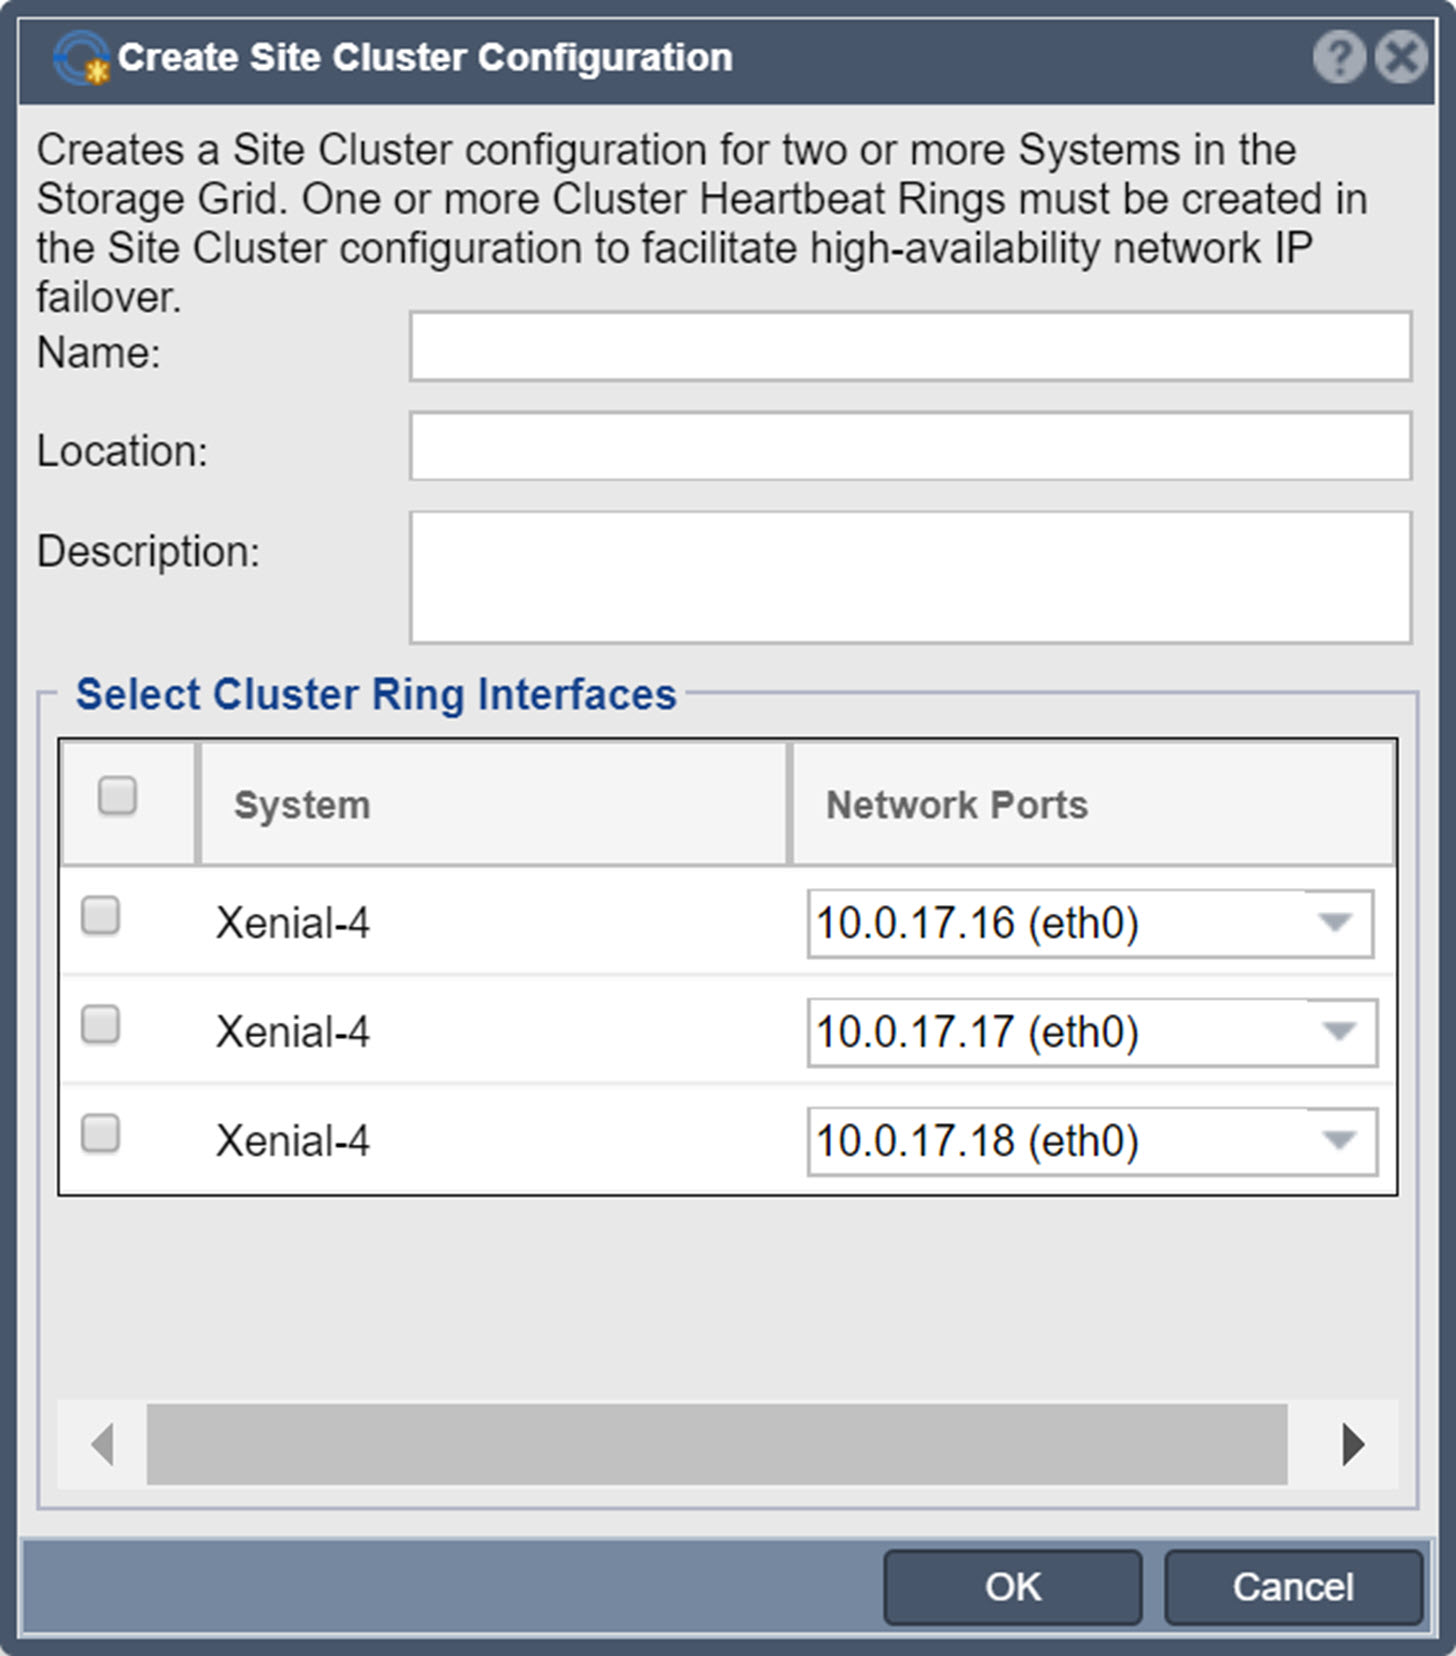 Create Site Cluster Cnfg.jpg